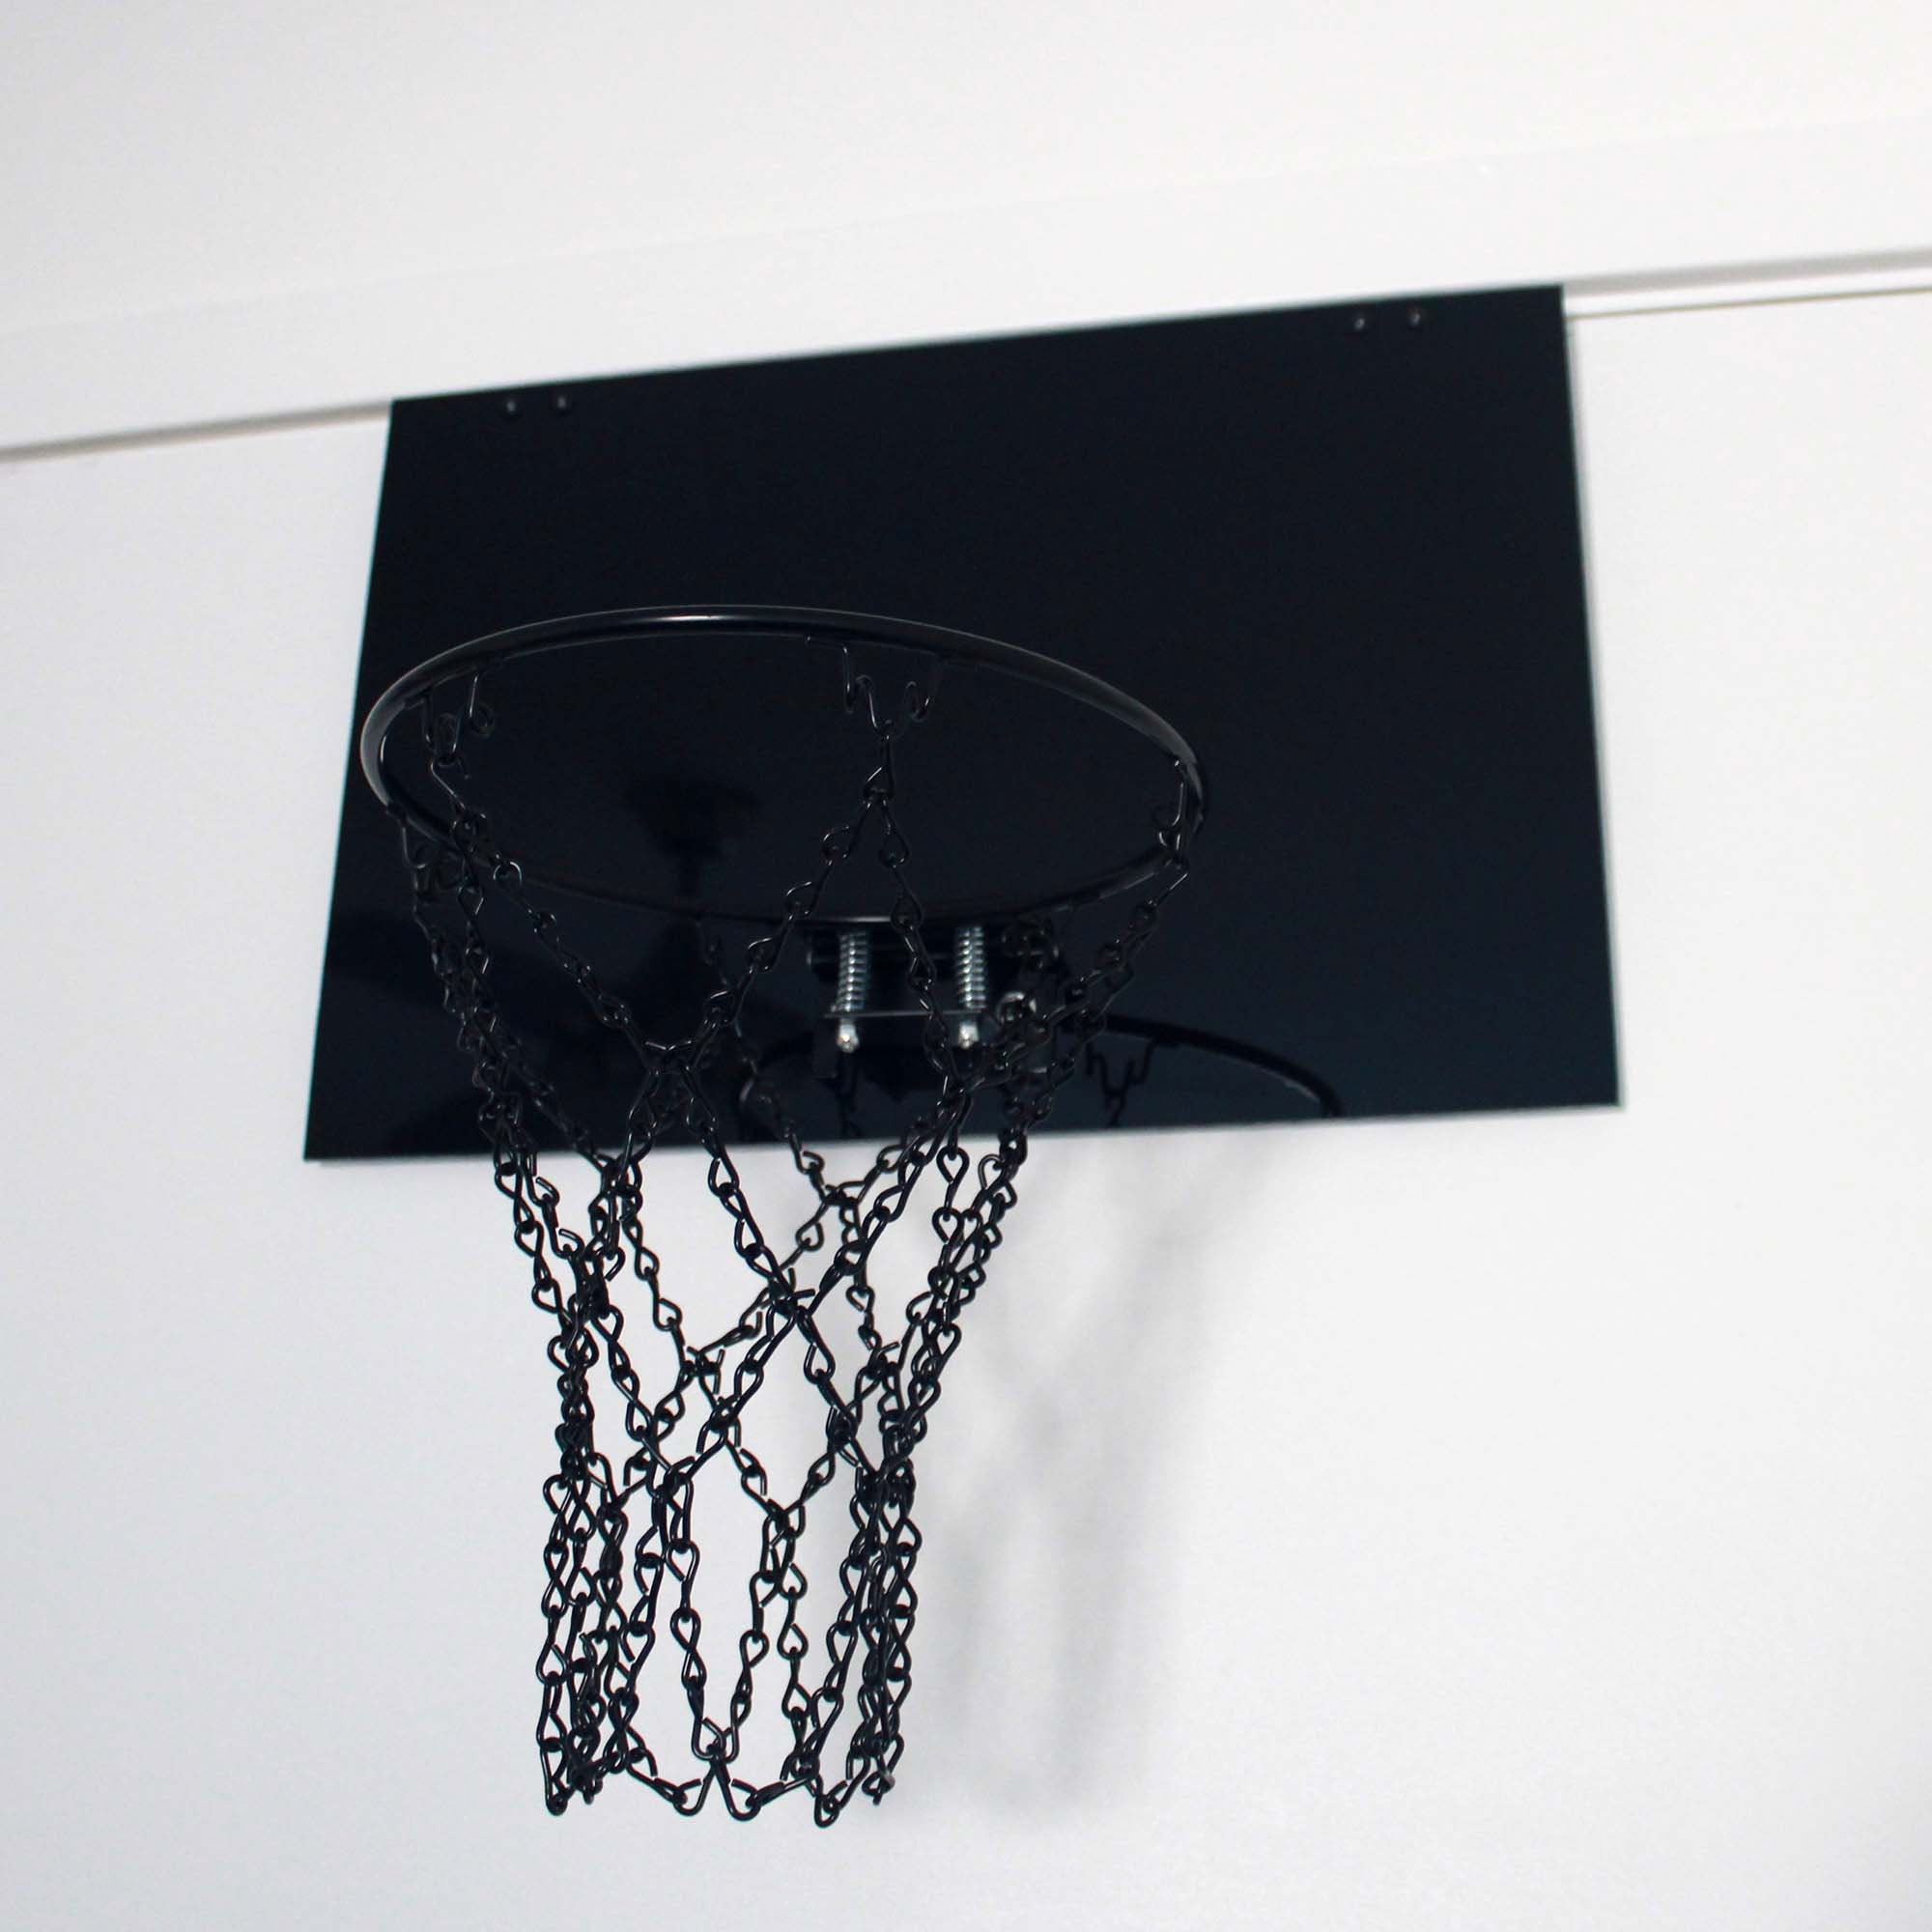 ropoda Mini Basketball Hoop, Indoor Basketball Hoop for Kids, 17×12  Shatter Resistant Backboard - Complete Accessories Included